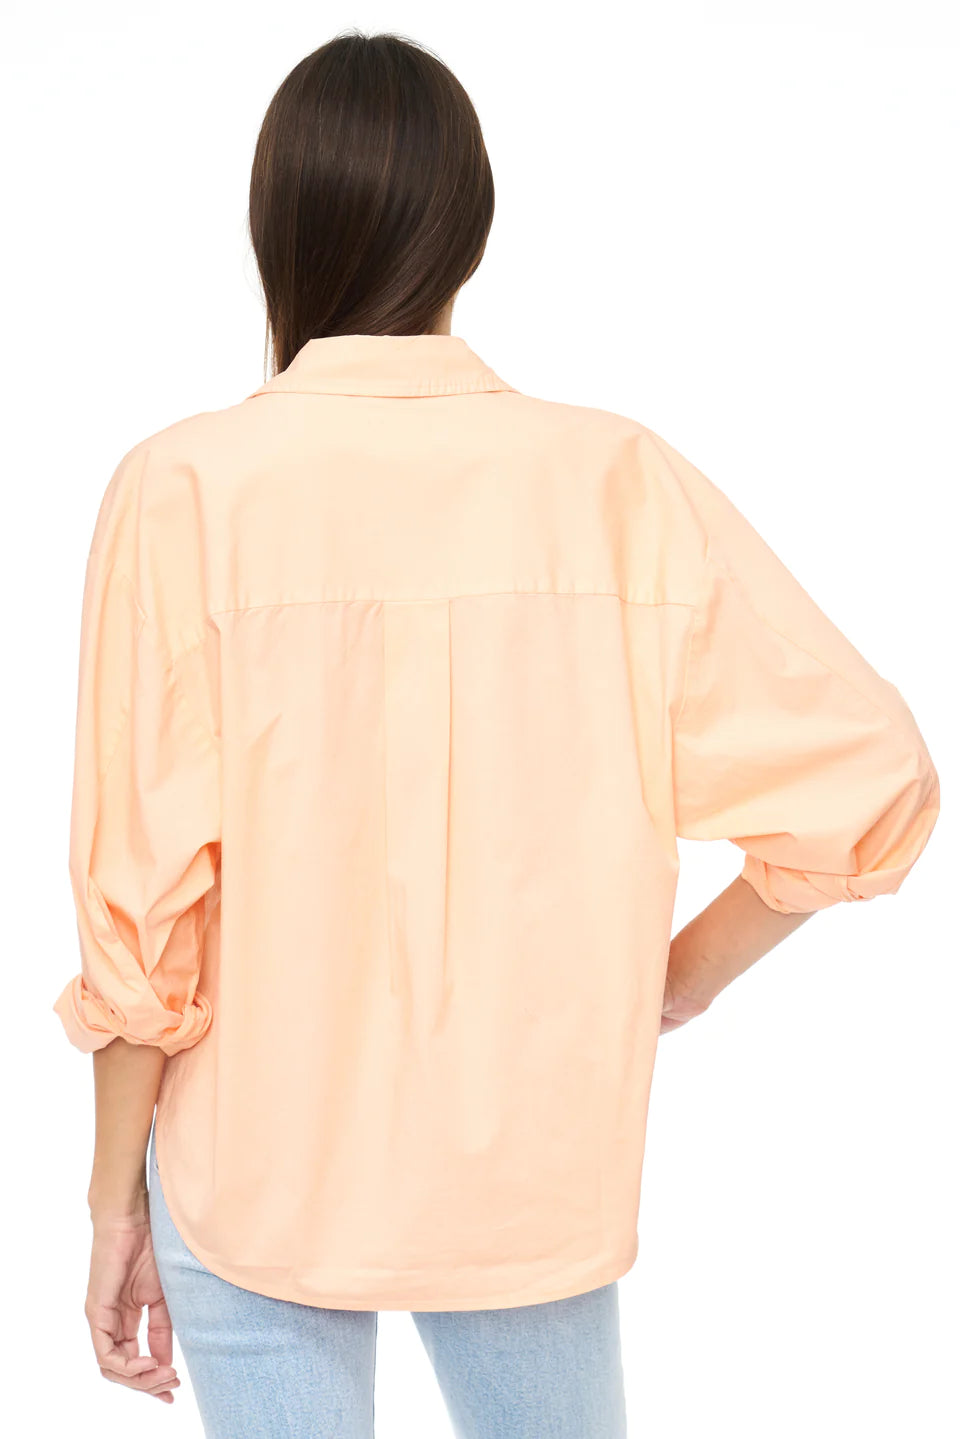 Sloane Oversized Button Down Shirt - PISTOLA